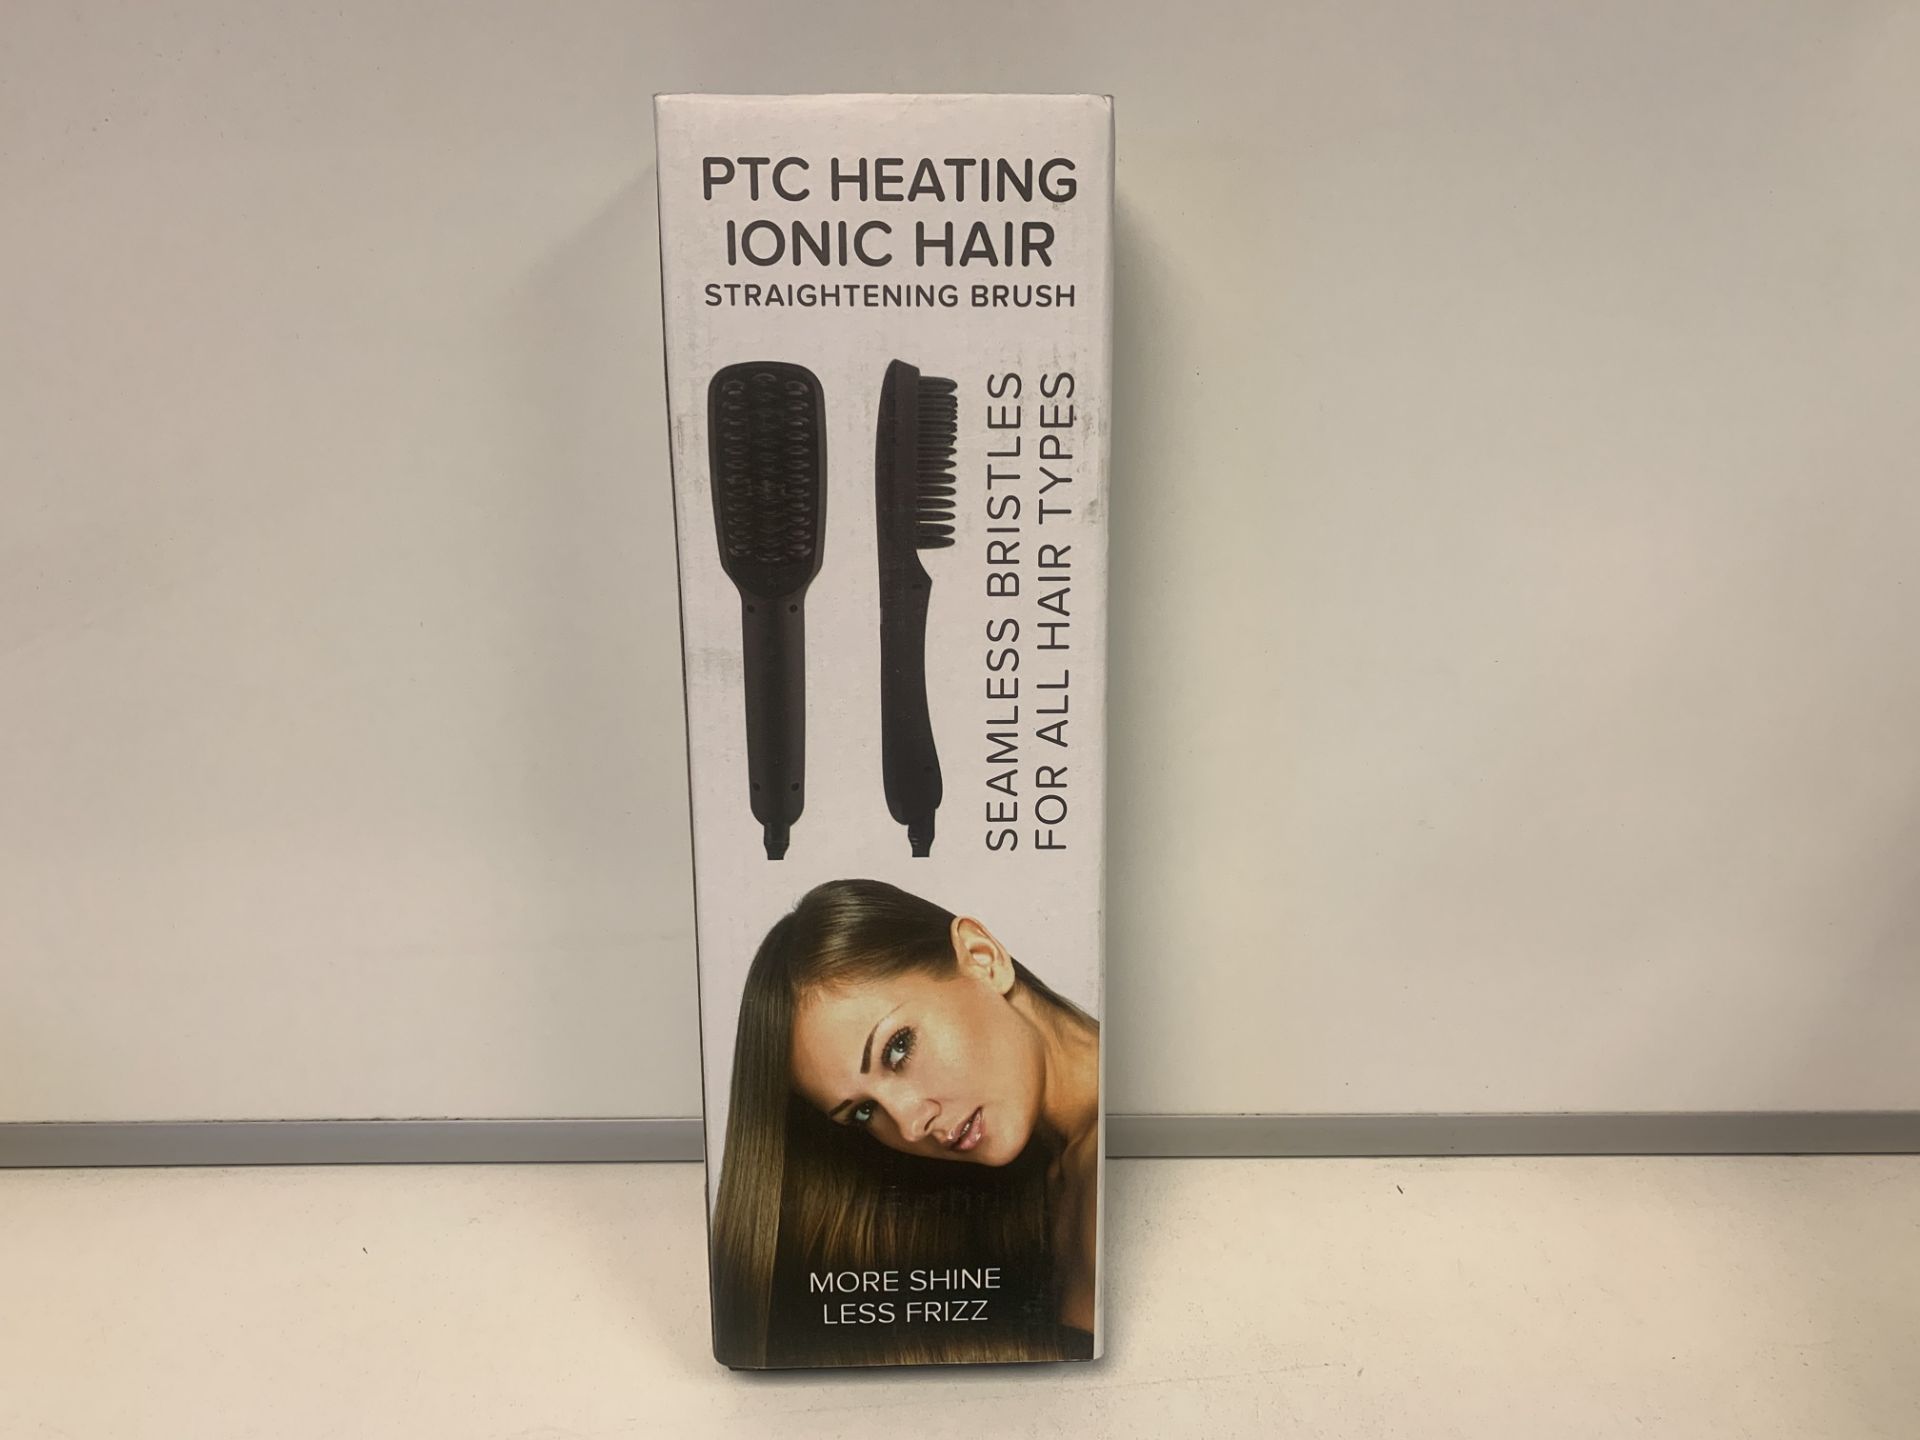 8 X NEW BOXED PTC HEATING IONIC HAIR STRAIGHTENING BRUSHES. RRP £24.99 EACH